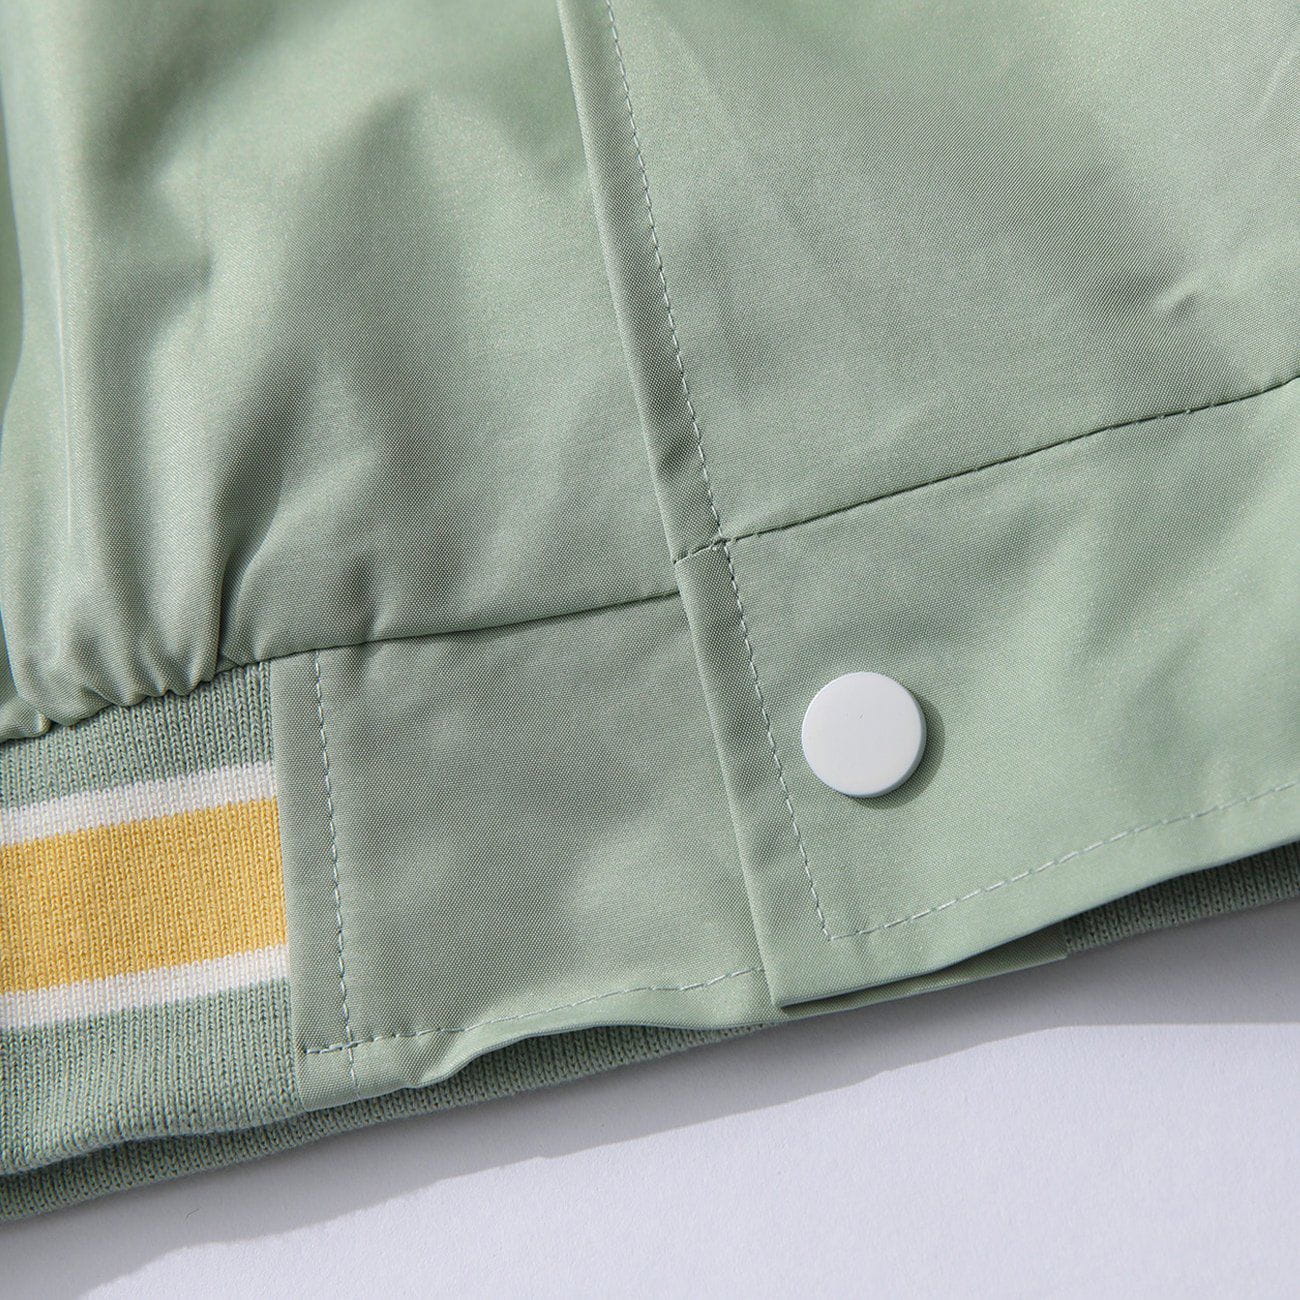 LUXENFY™ - Bear Embroidery Stitching Sleeve Baseball Uniform Jacket luxenfy.com